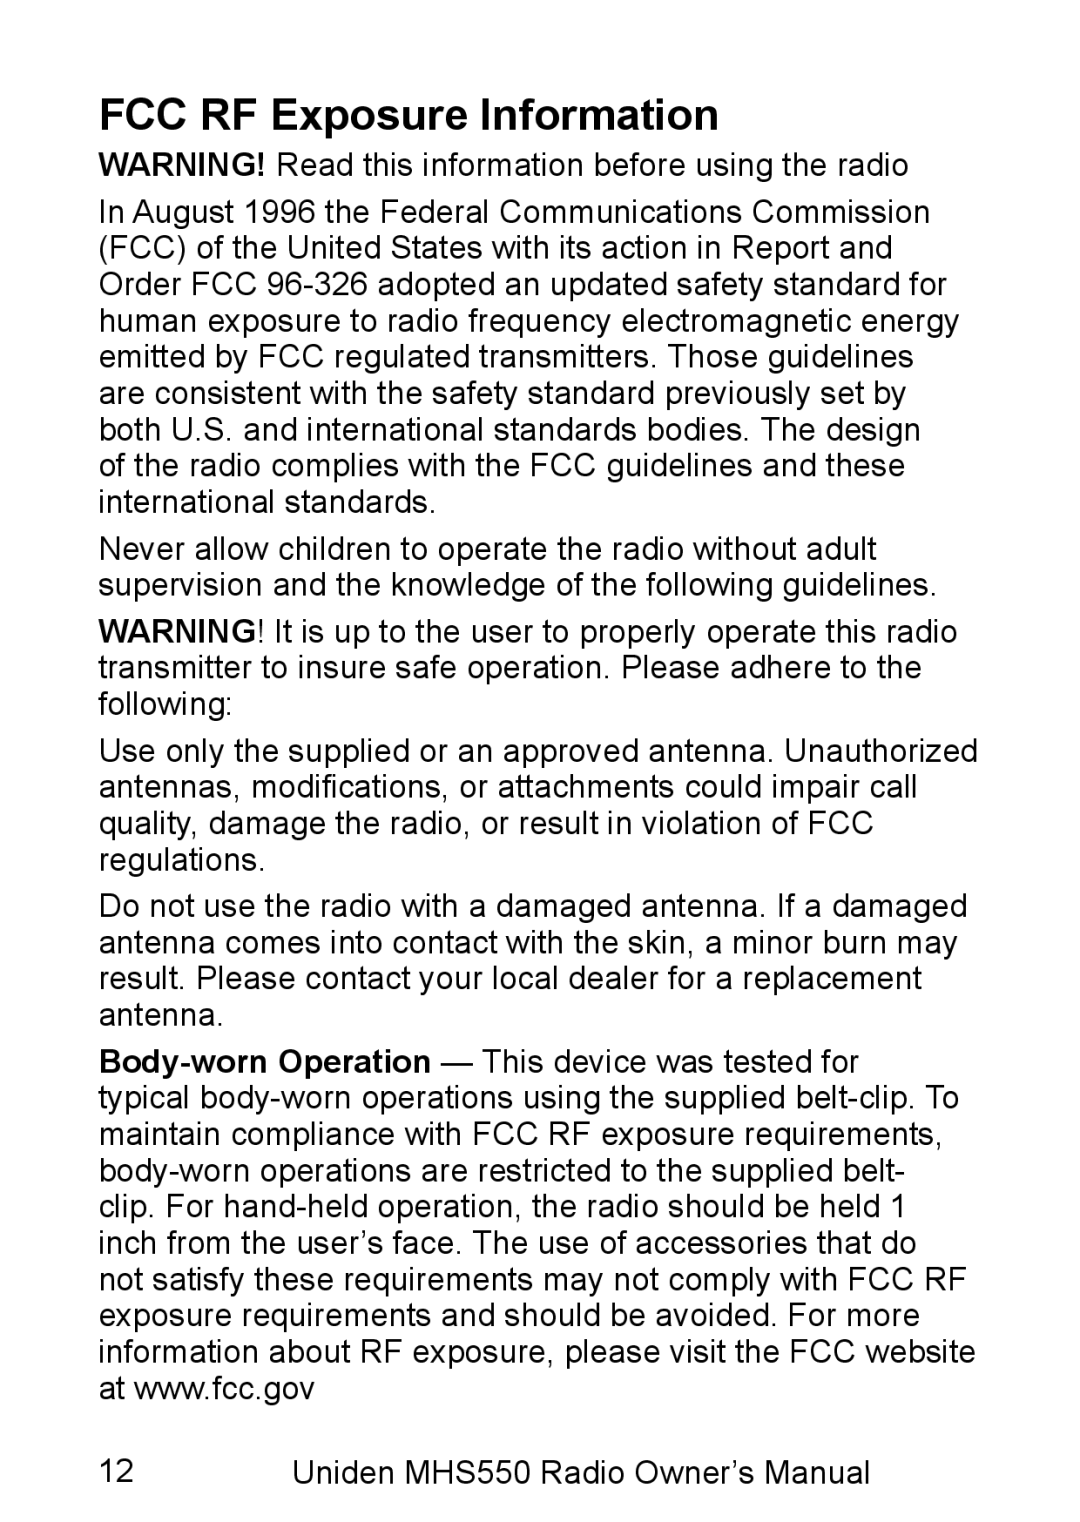 Uniden MHS550 manual FCC RF Exposure Information 